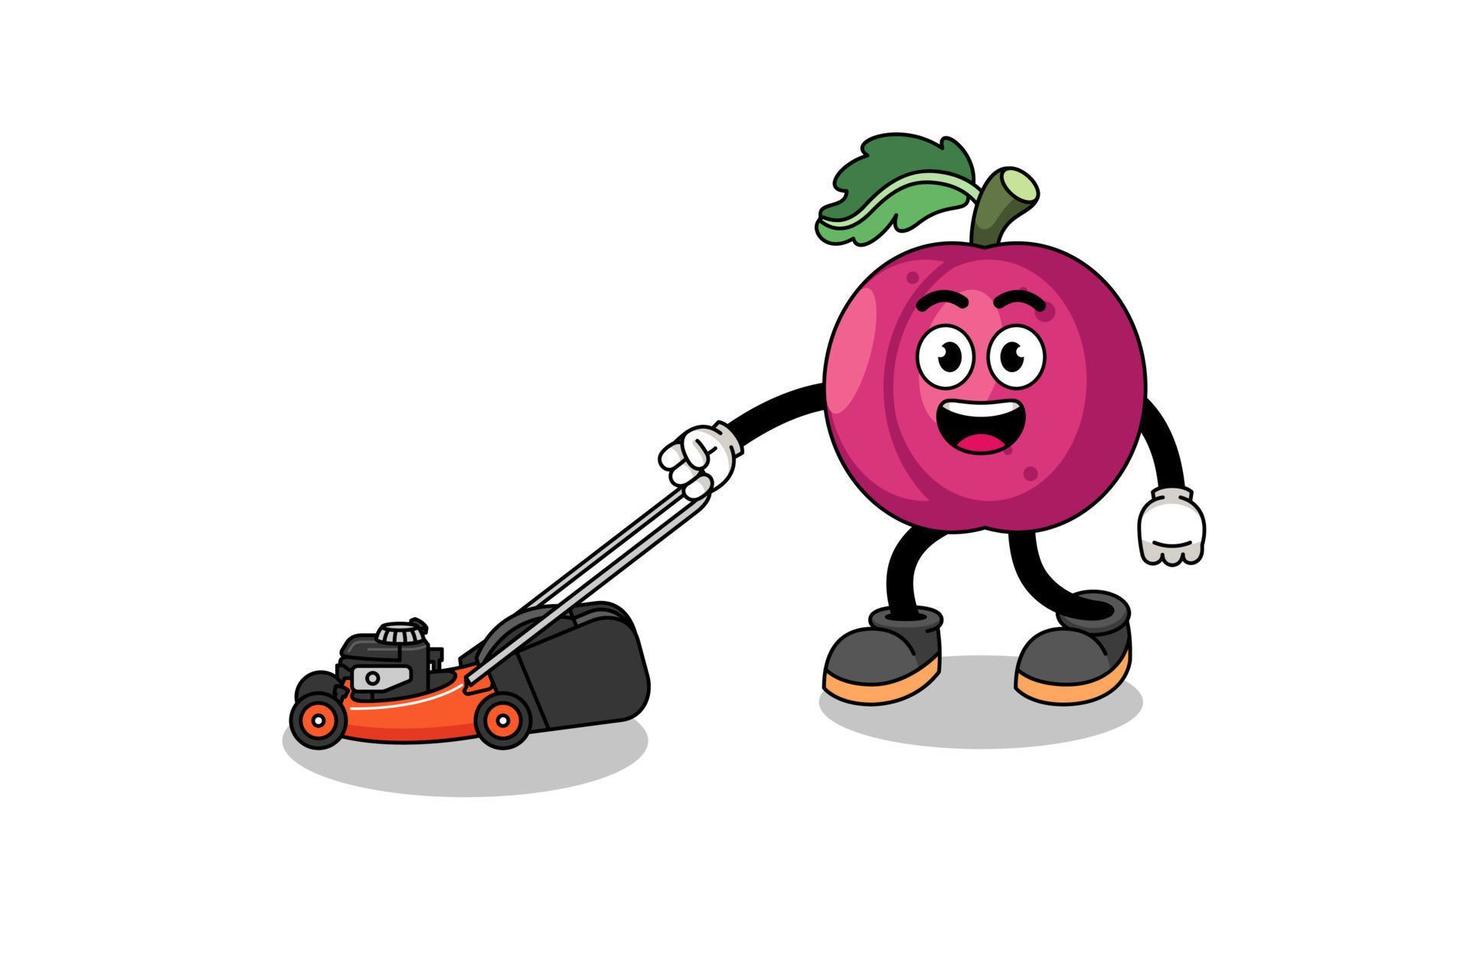 plum fruit illustration cartoon holding lawn mower vector